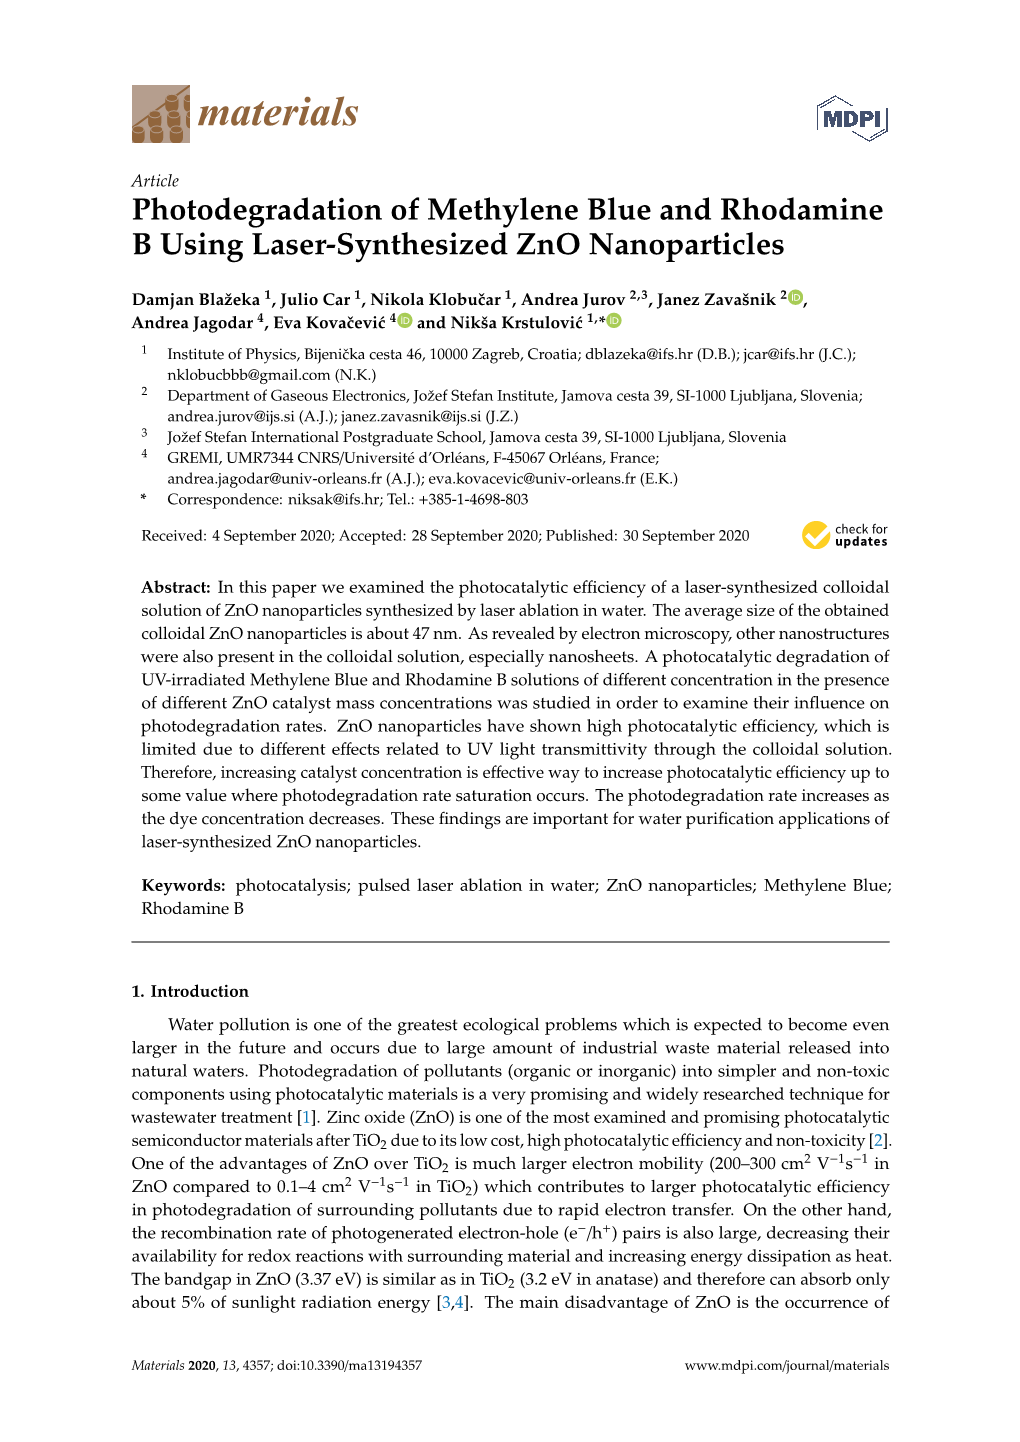 Photodegradation of Methylene Blue and Rhodamine B Using Laser-Synthesized Zno Nanoparticles